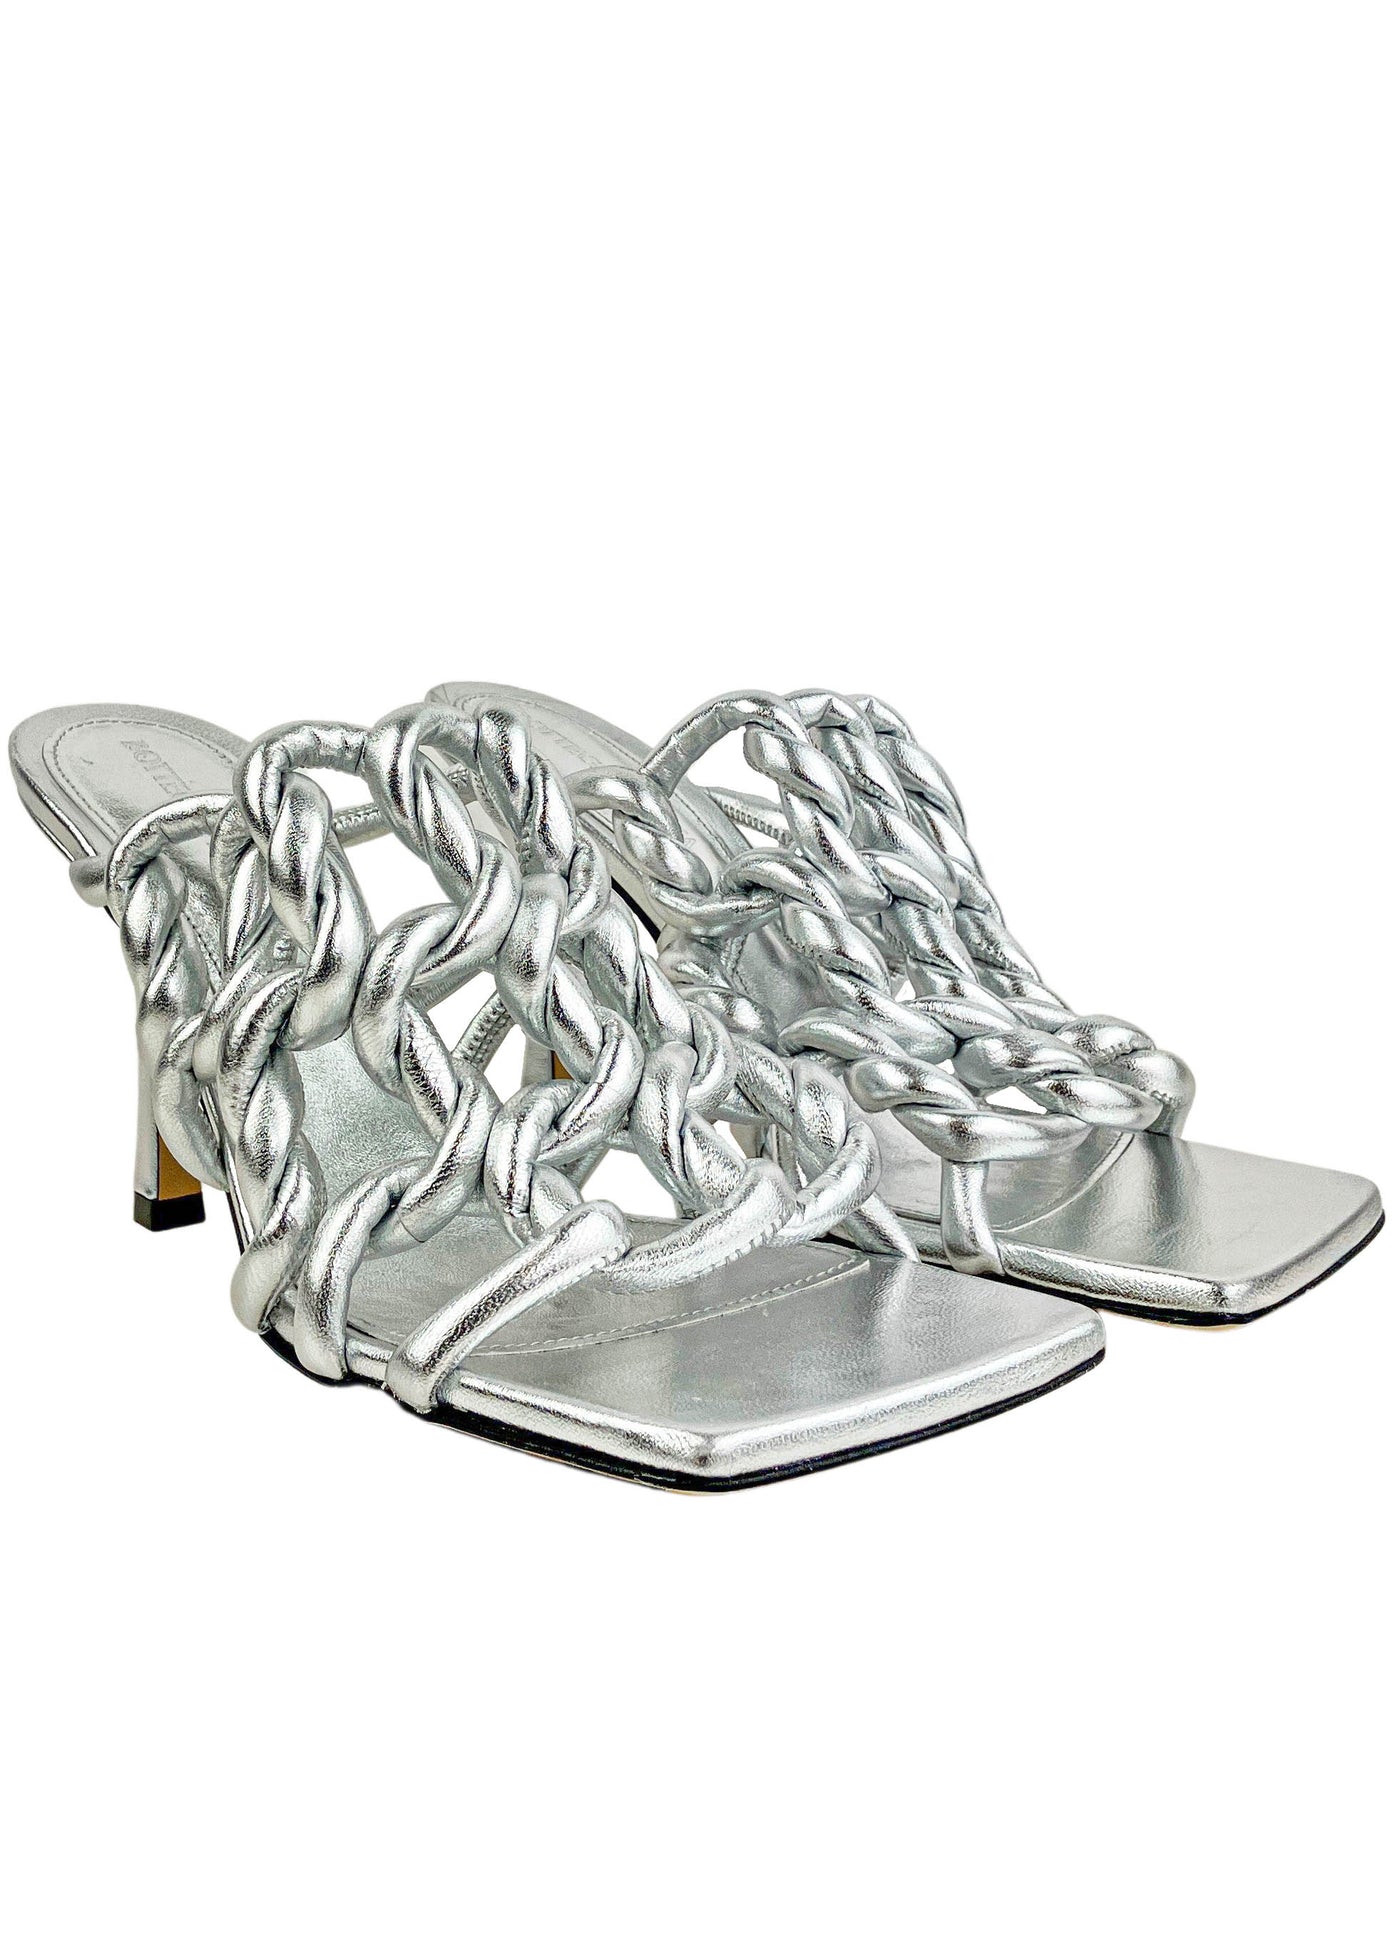 Bottega Veneta Reflection Weave Open Toe Mule in Silver - Discounts on Bottega Veneta at UAL